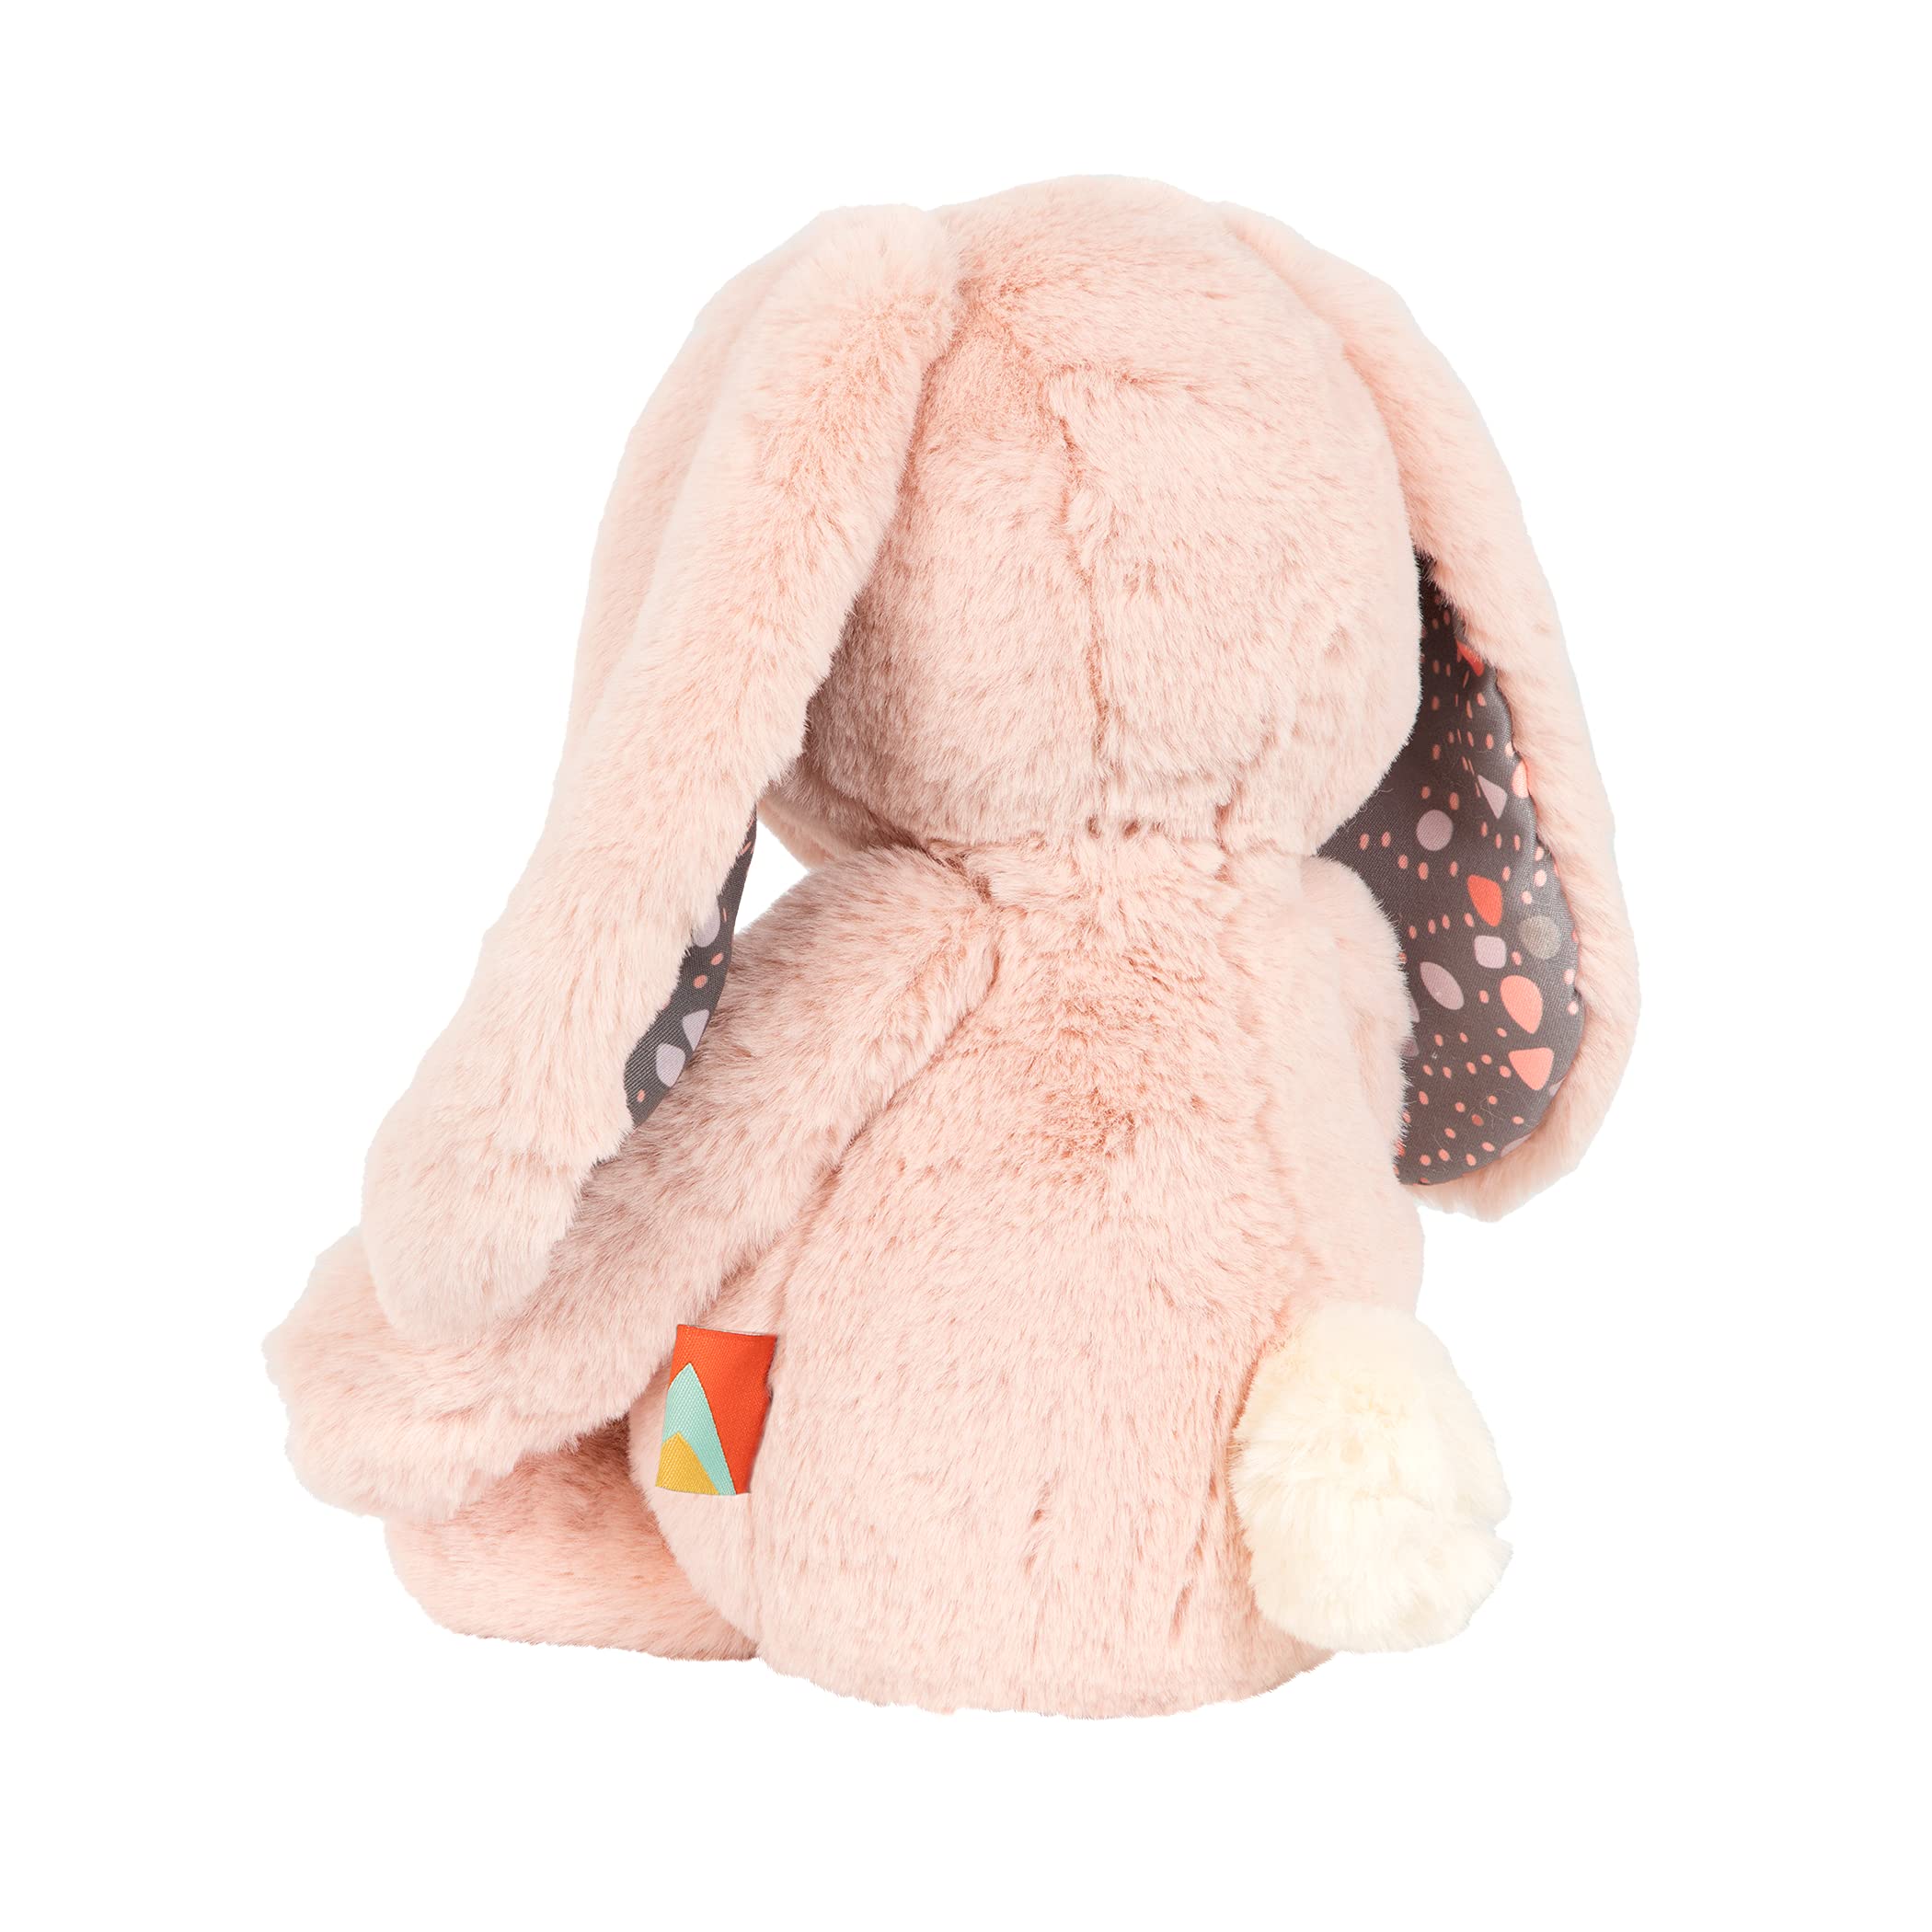 B. Toys Happyhues Butterscotch Bunny, Plush Bunny Stuffed Animal, 12 Inches